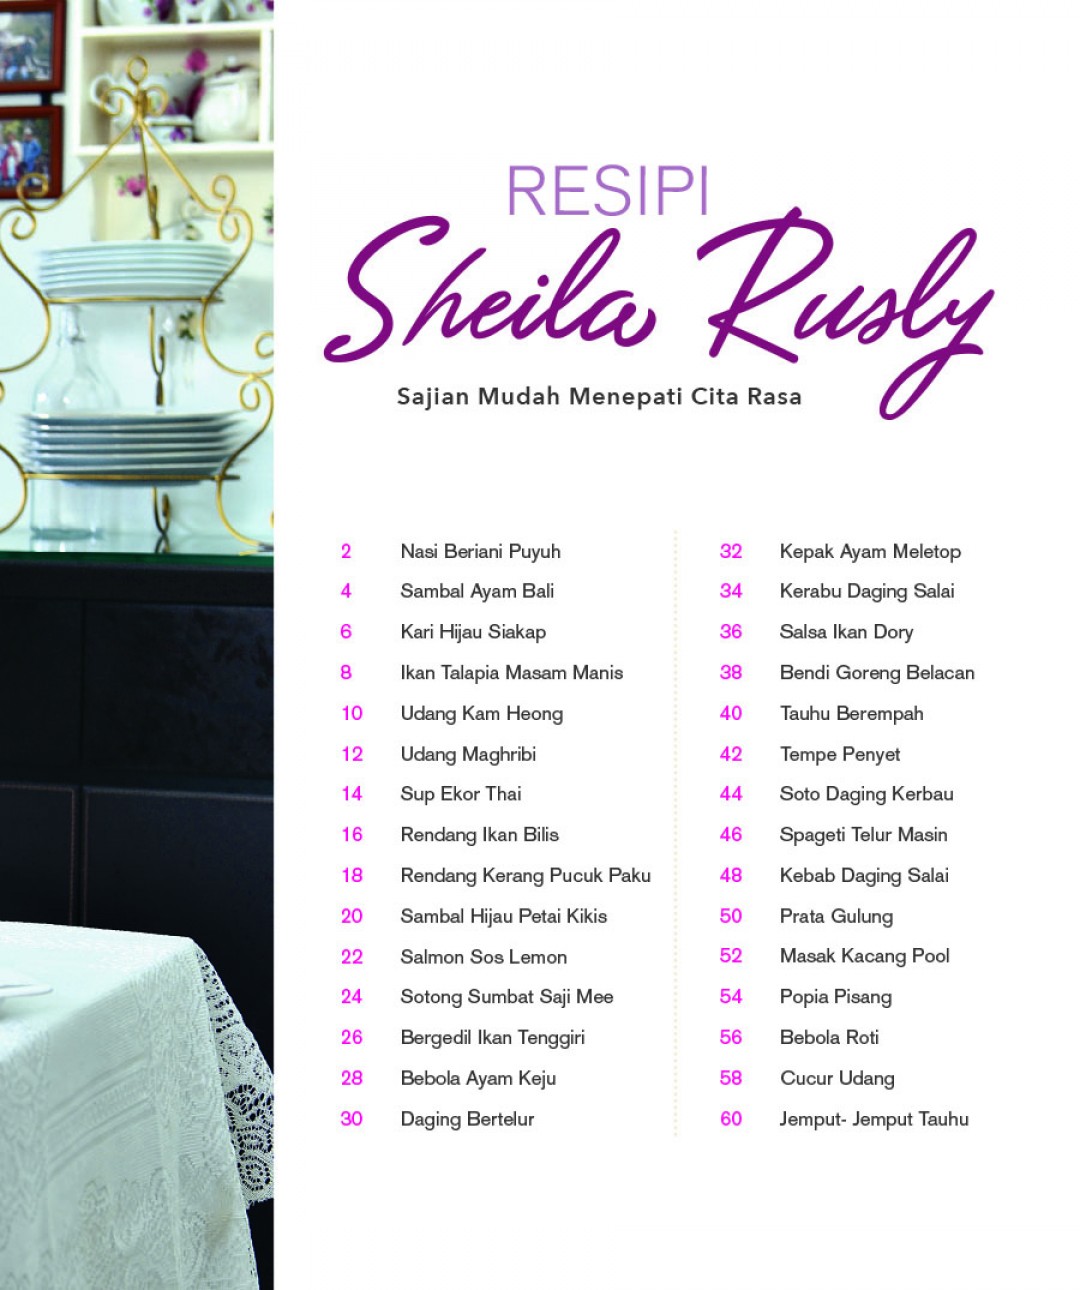 Ketuk-ketuk Sheila Rusly 2016